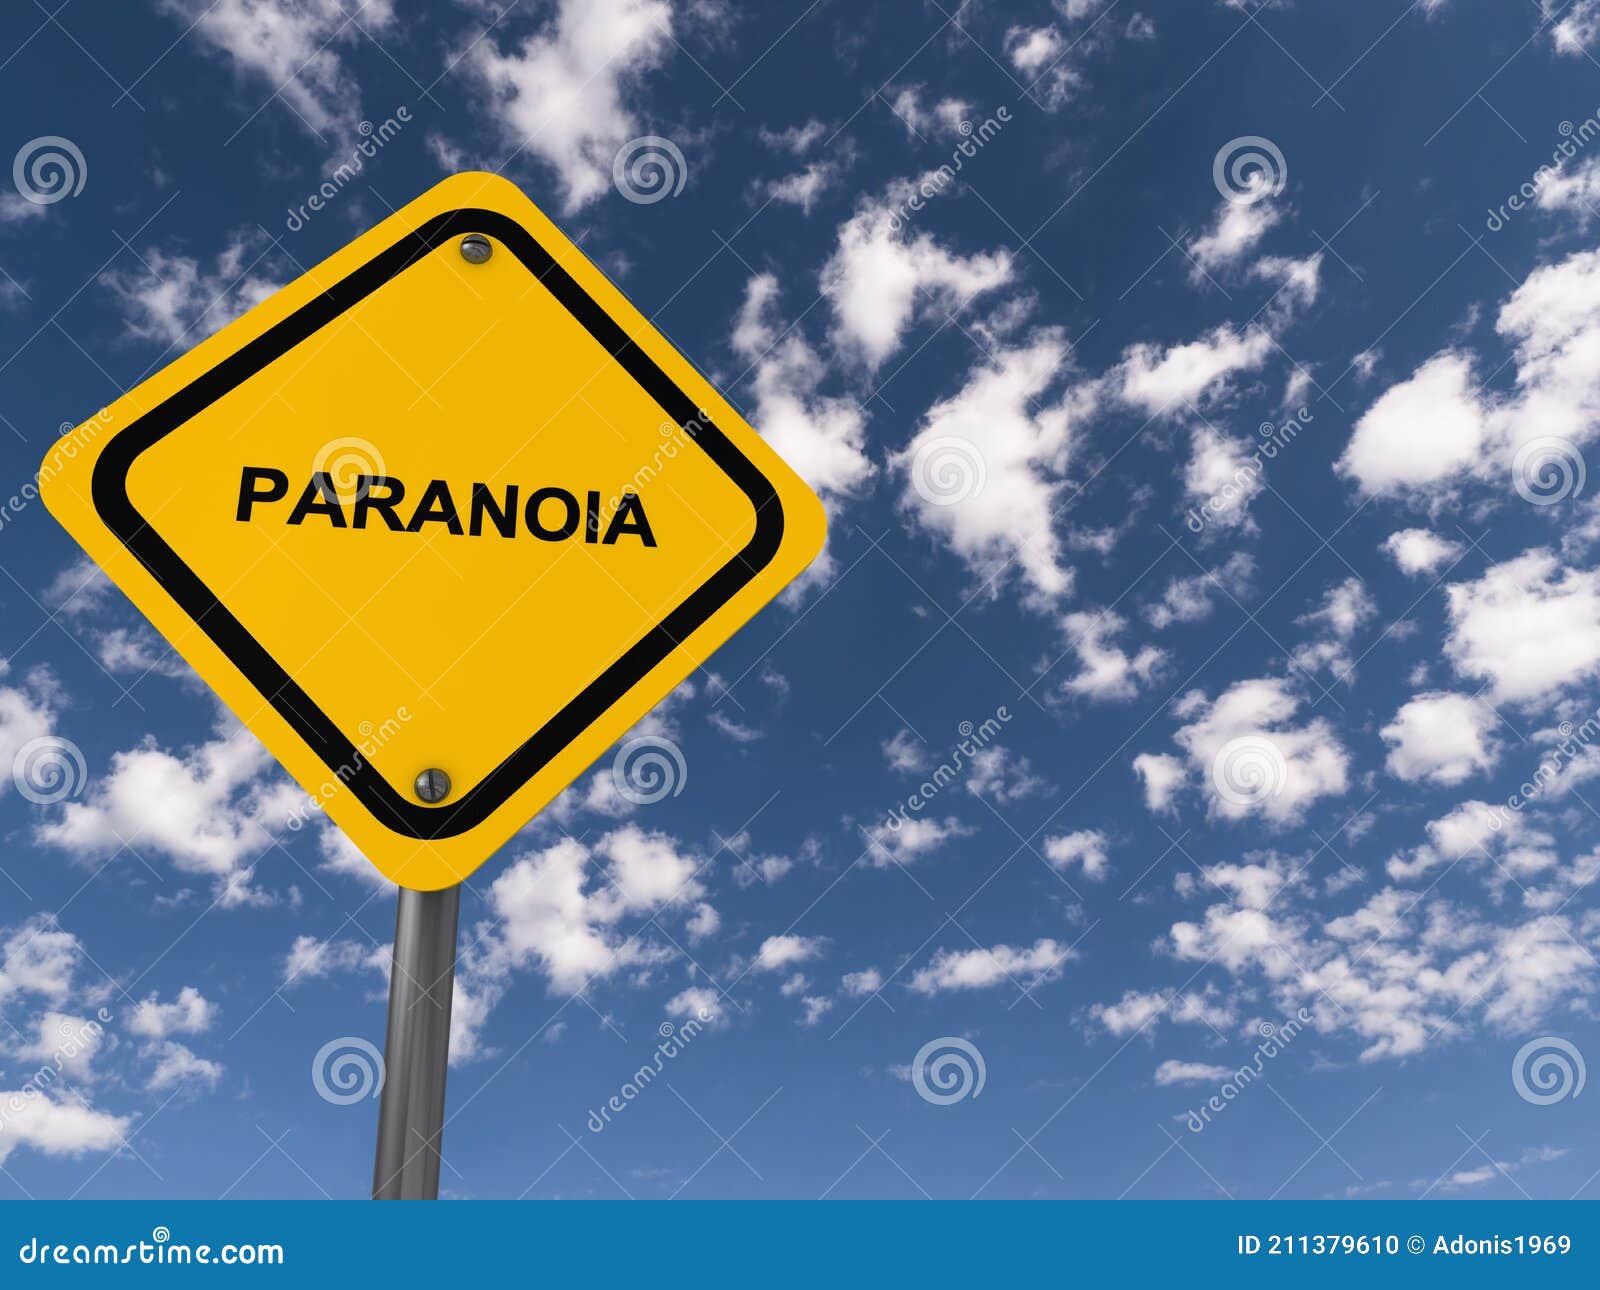 paranoia traffic sign